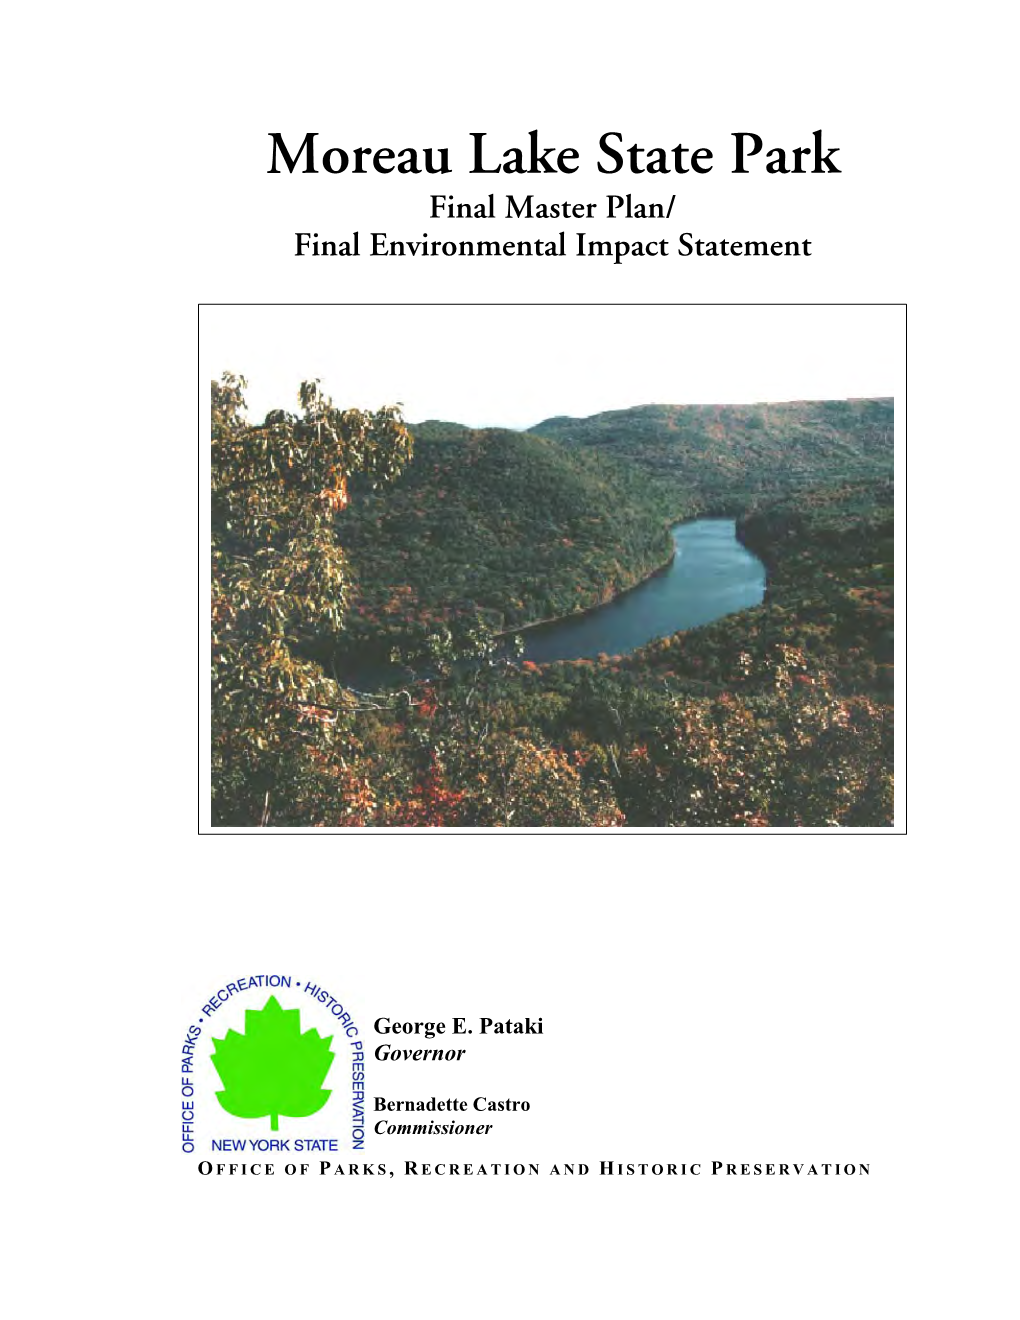 Moreau Lake State Park Final Master Plan/ Final Environmental Impact Statement